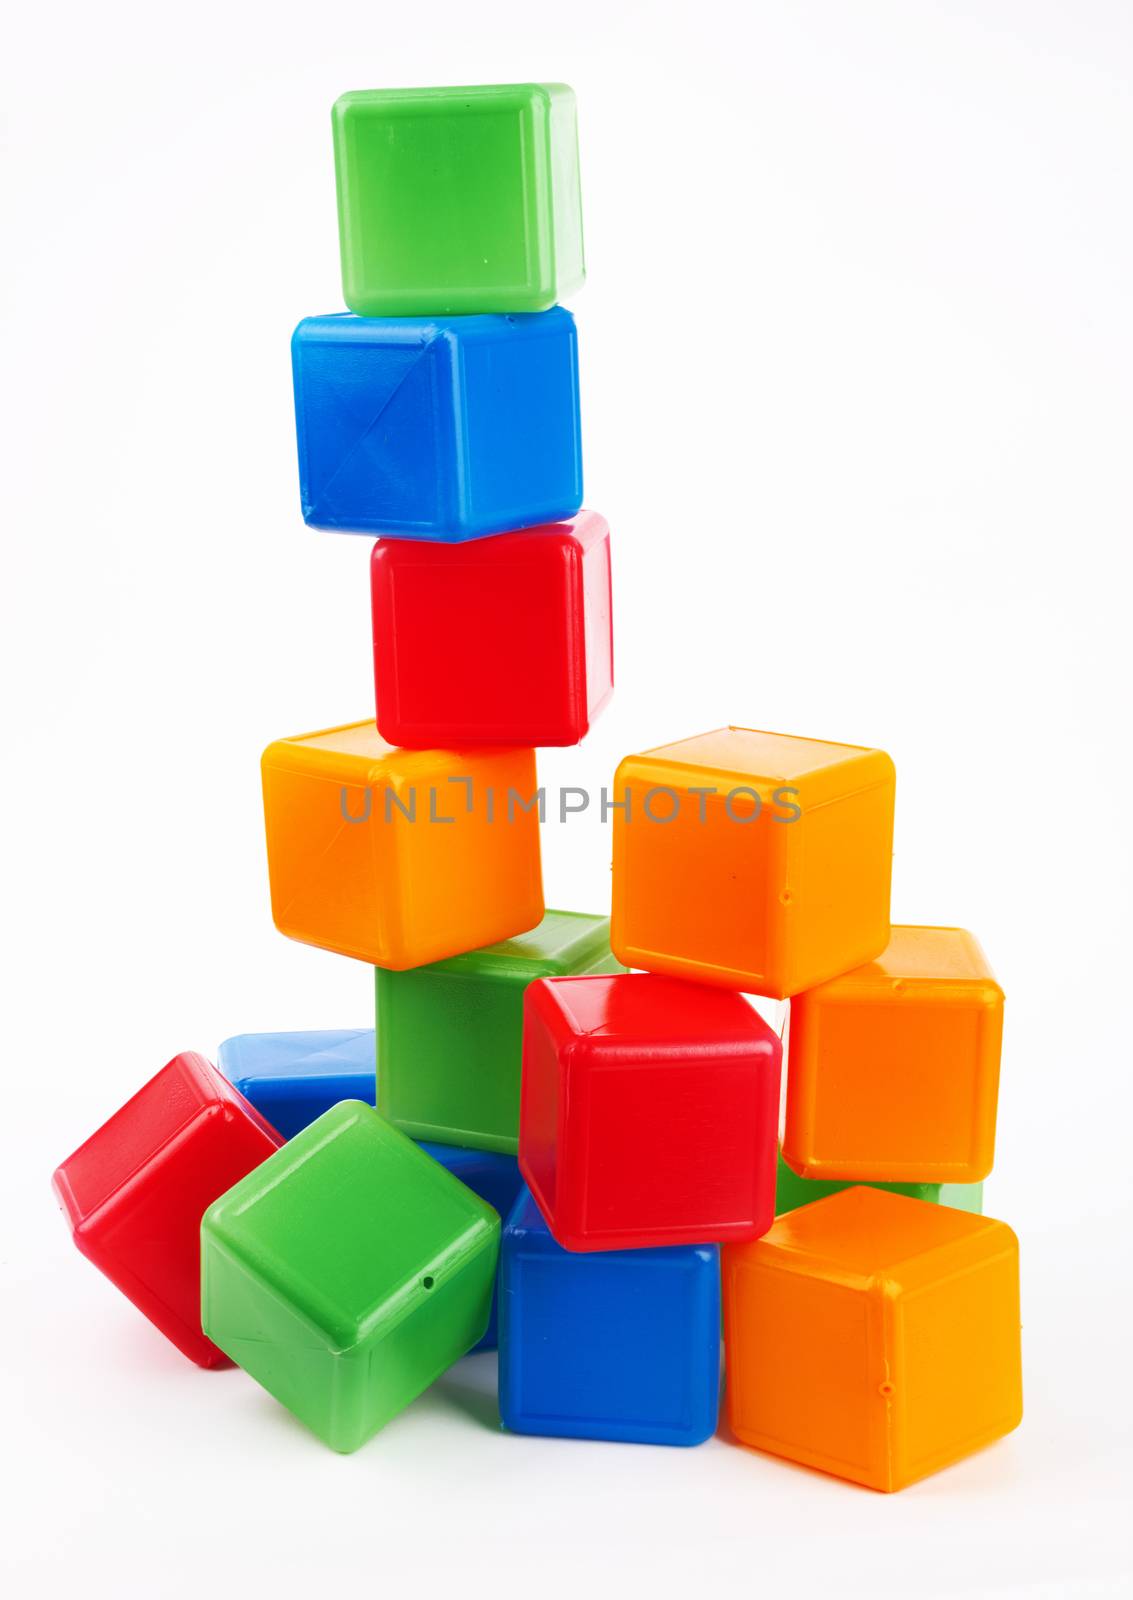 Cubes by pioneer111